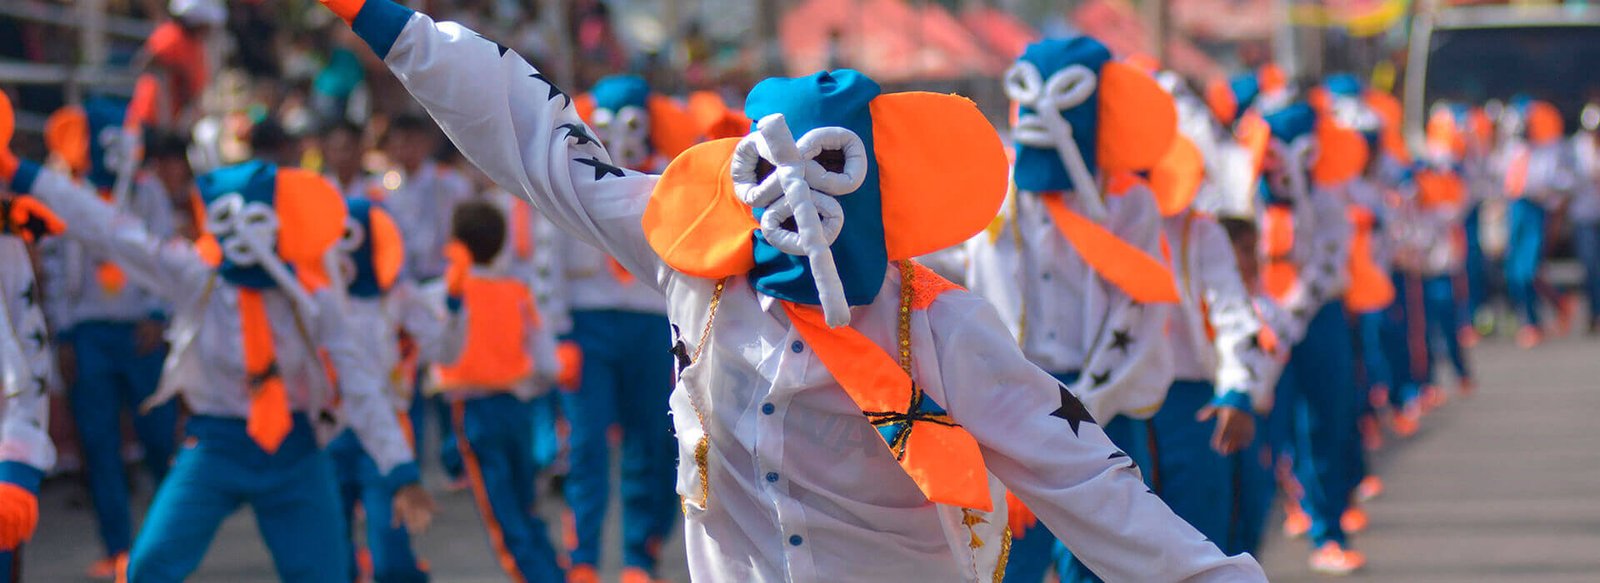 Carnaval De Barranquilla